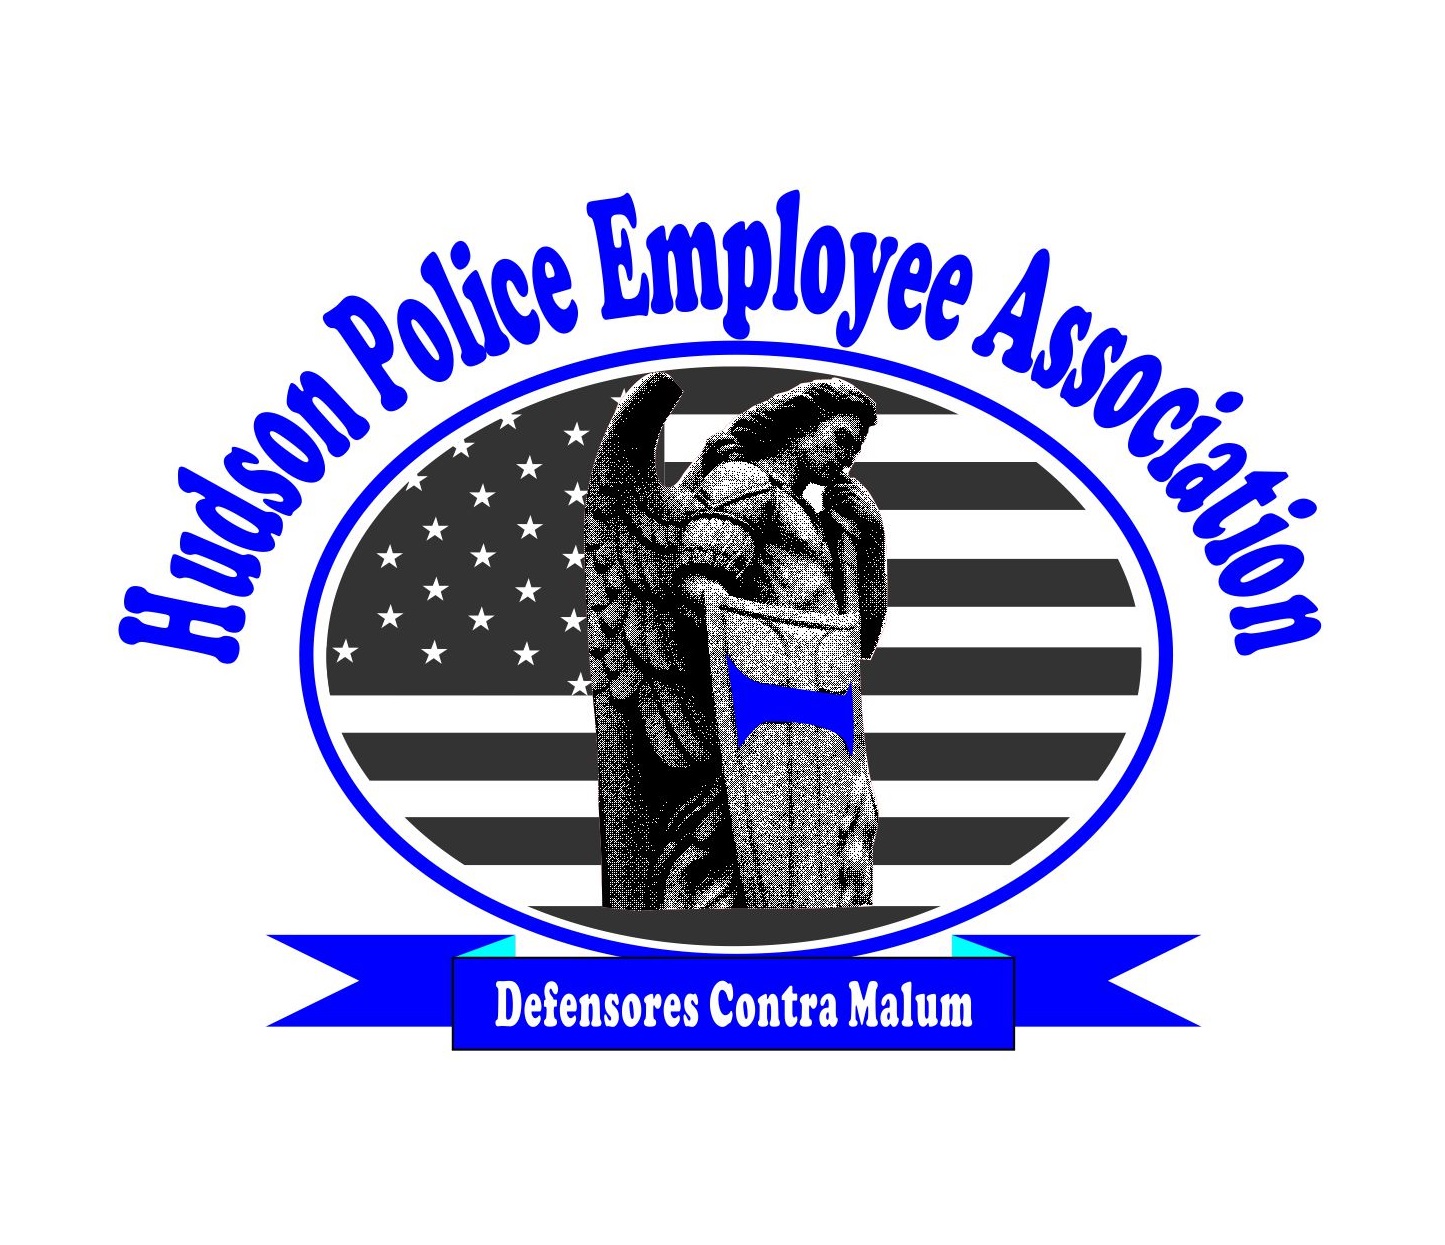 F - Hudson Police Employee Association